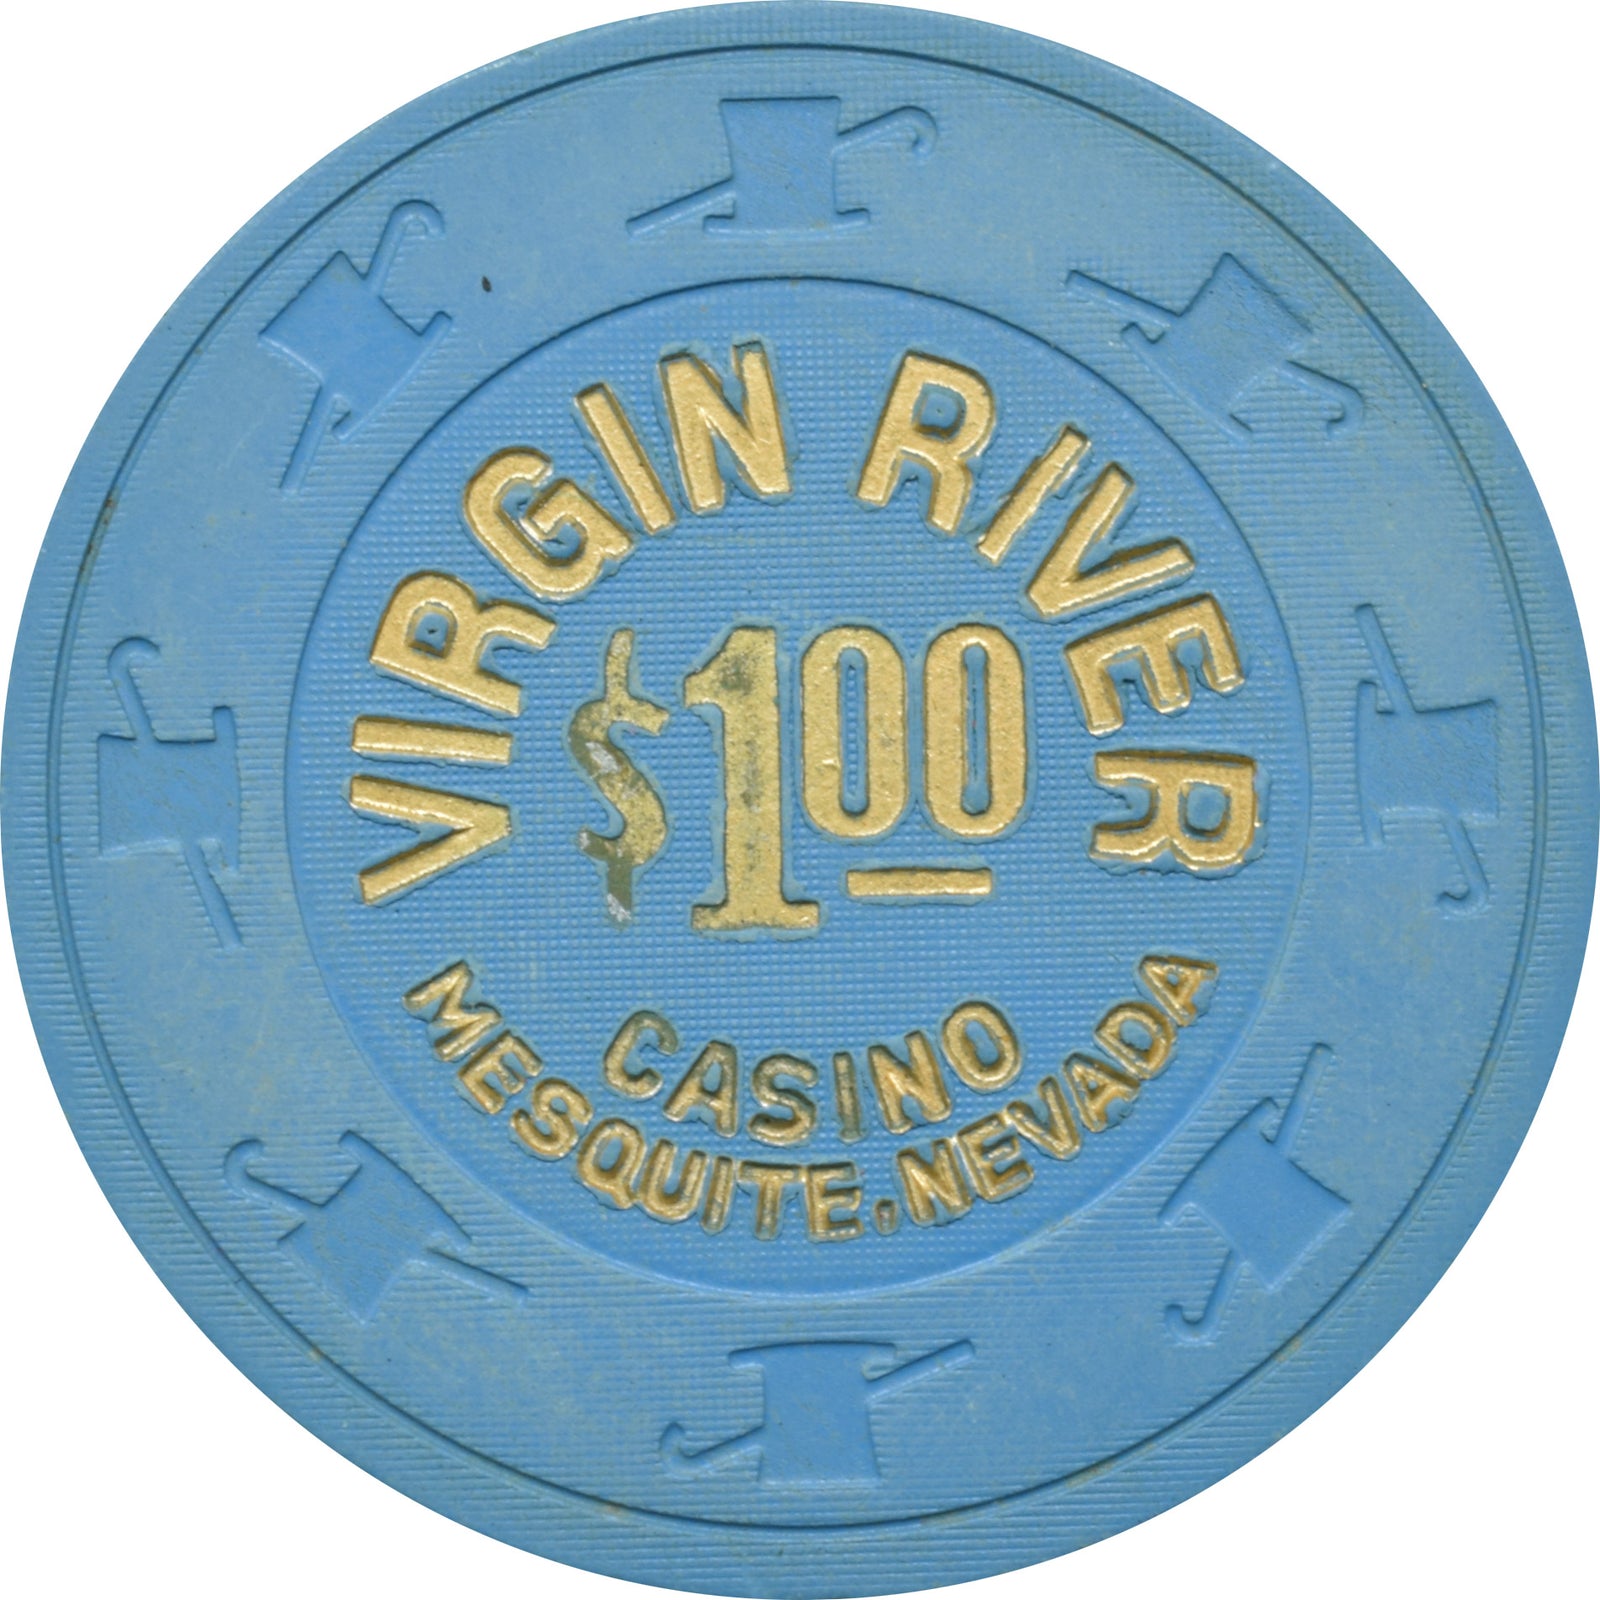 virgin river casino promo code